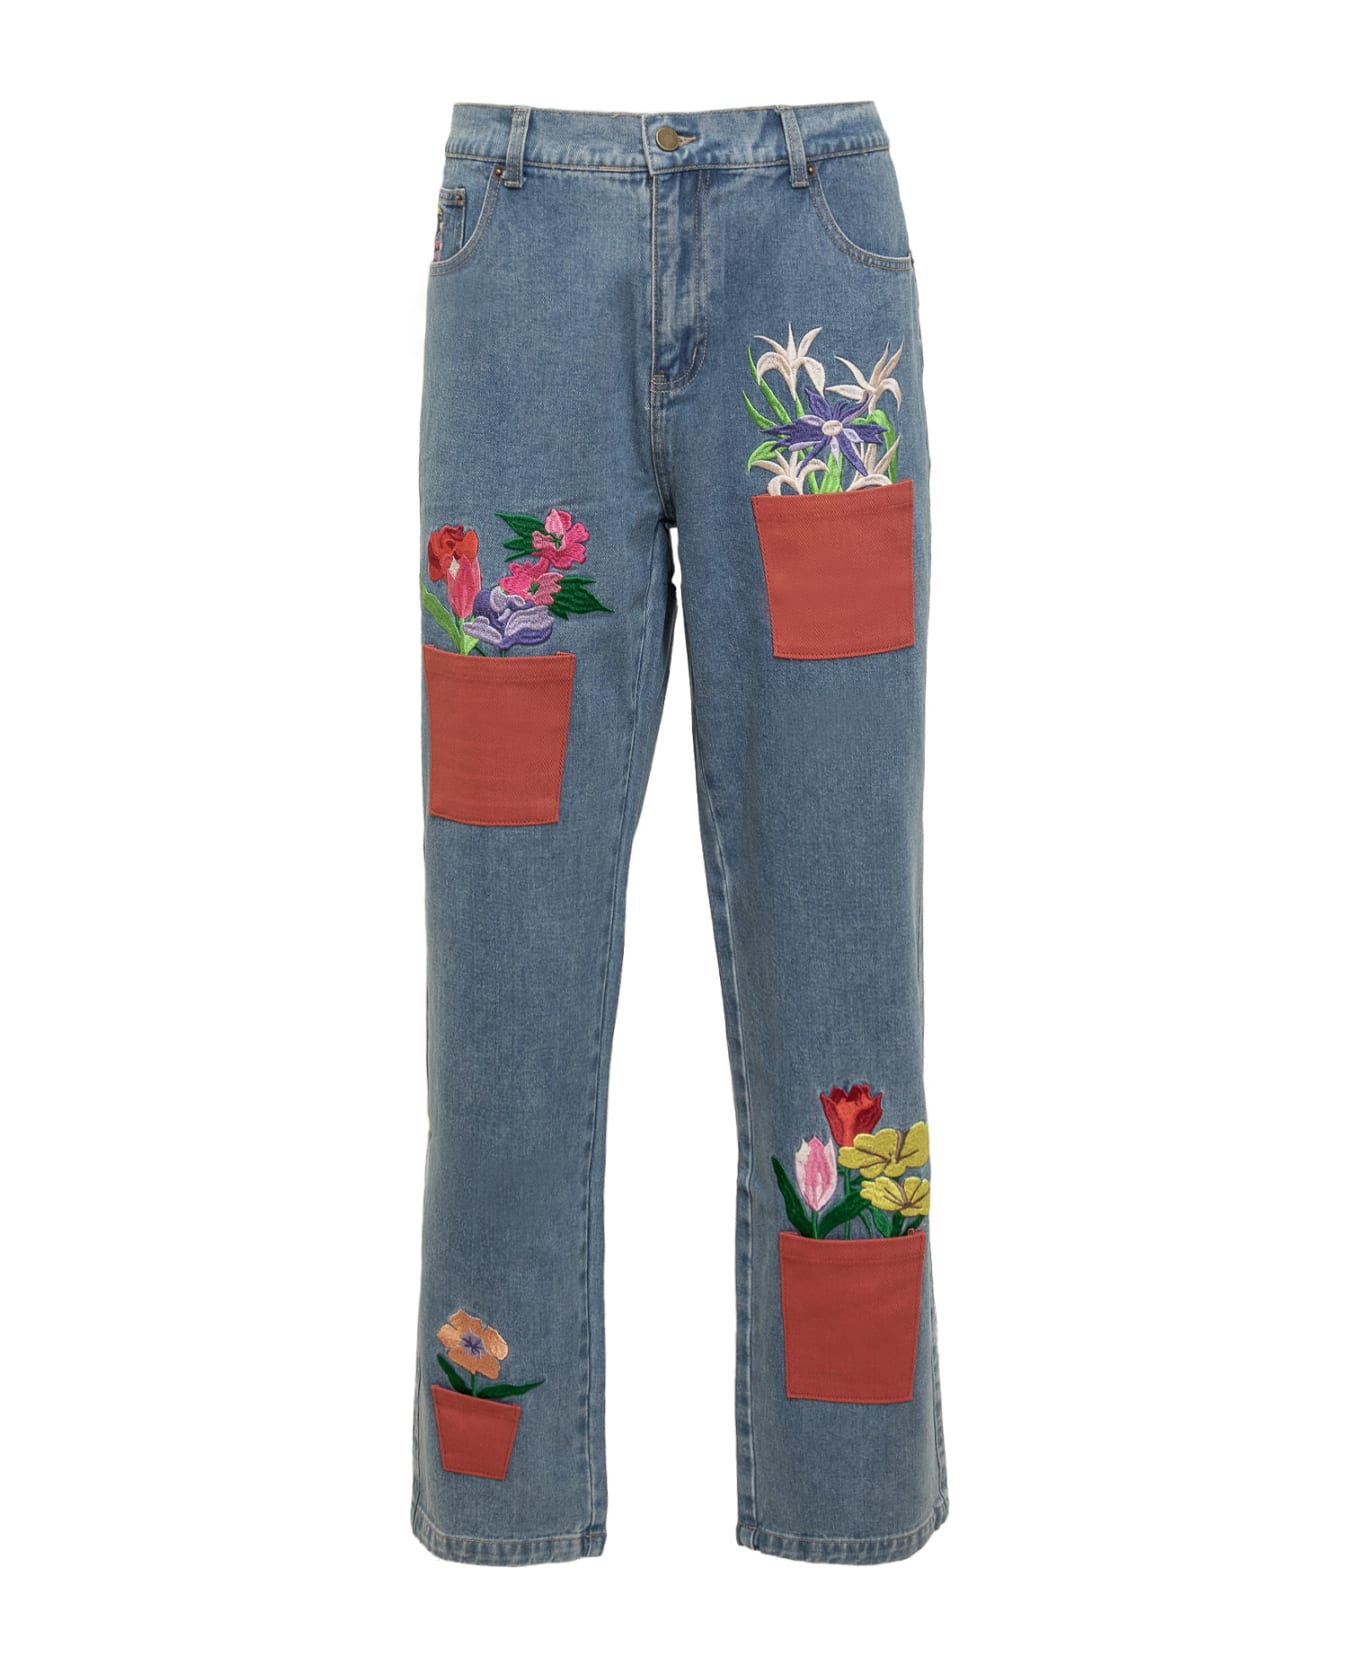 Kidsuper Flower Jeans - BLUE